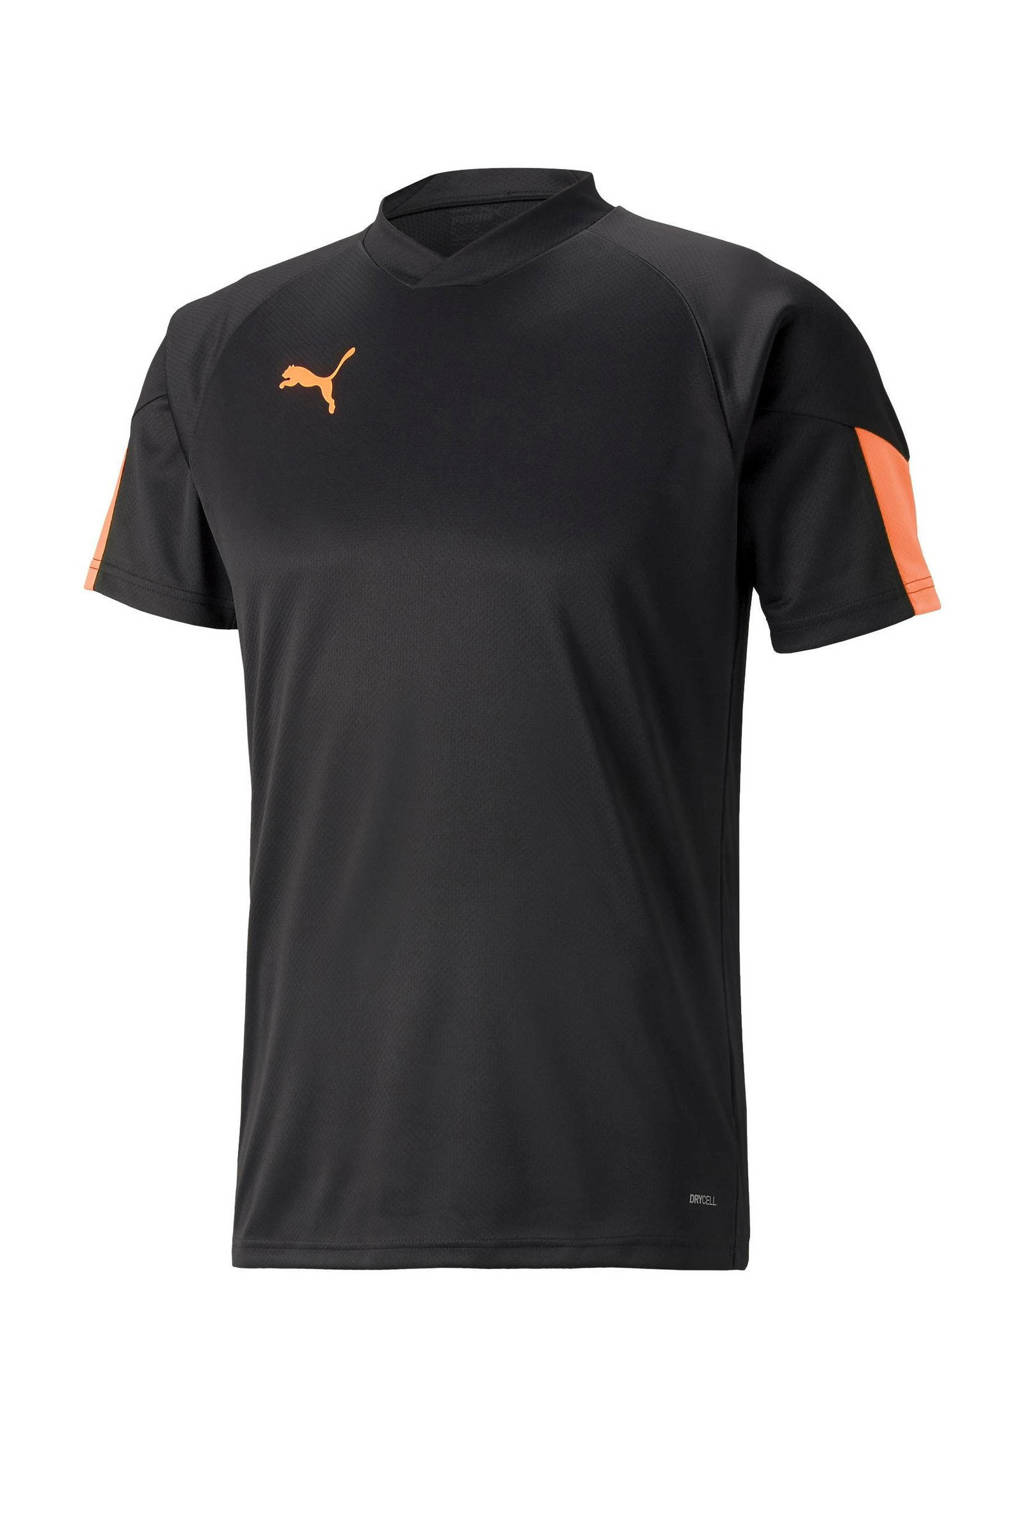 Puma   voetbalshirt zwart/oranje